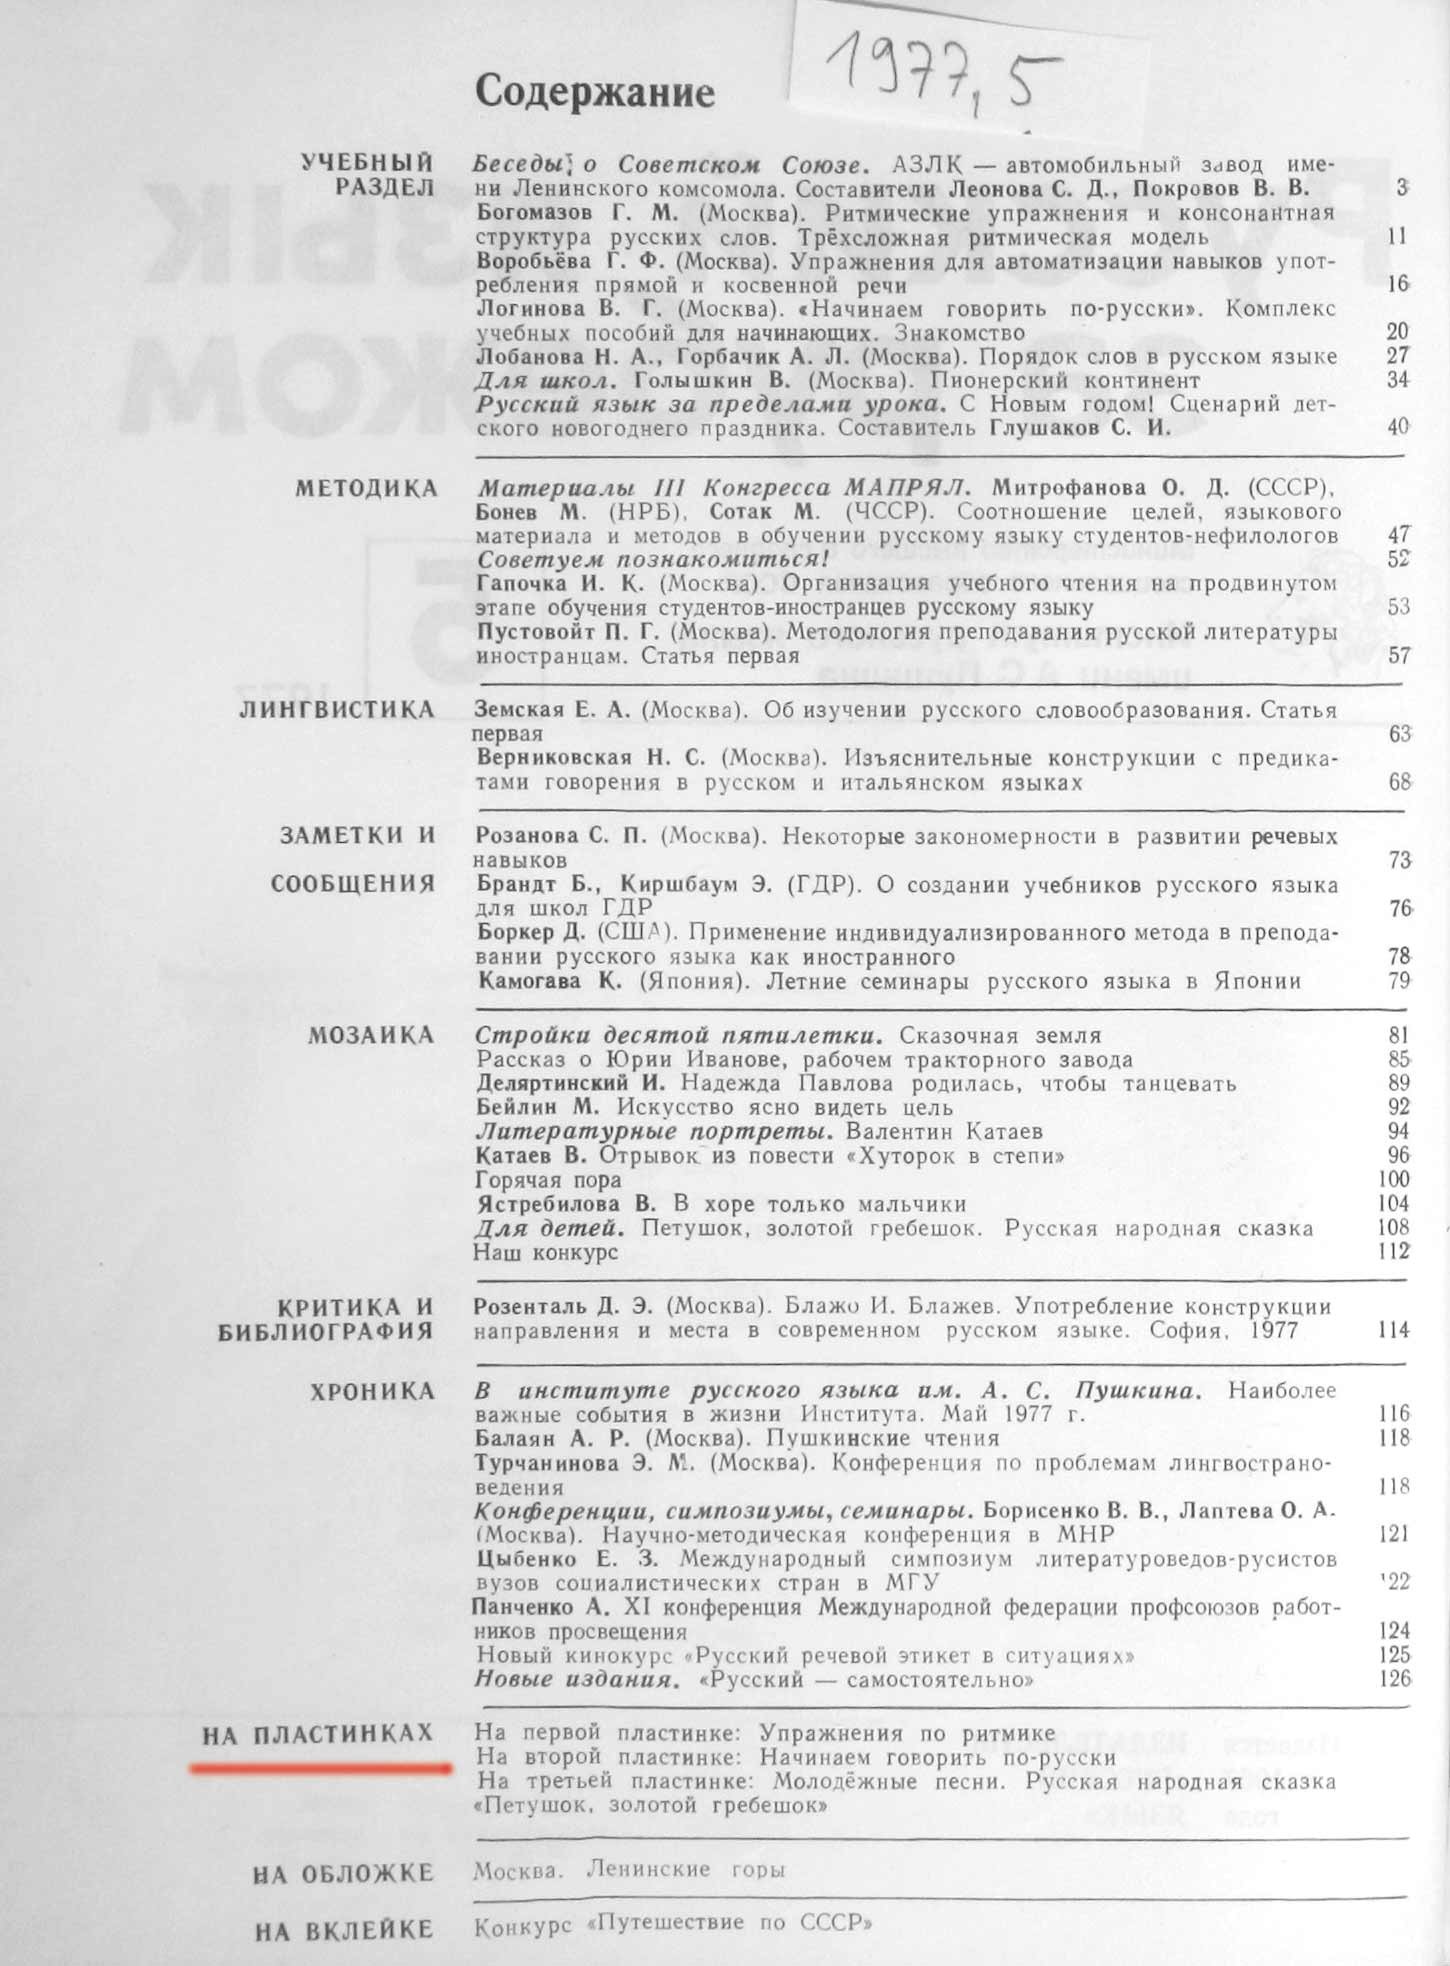 "РУССКИЙ ЯЗЫК ЗА РУБЕЖОМ", № 5 - 1977